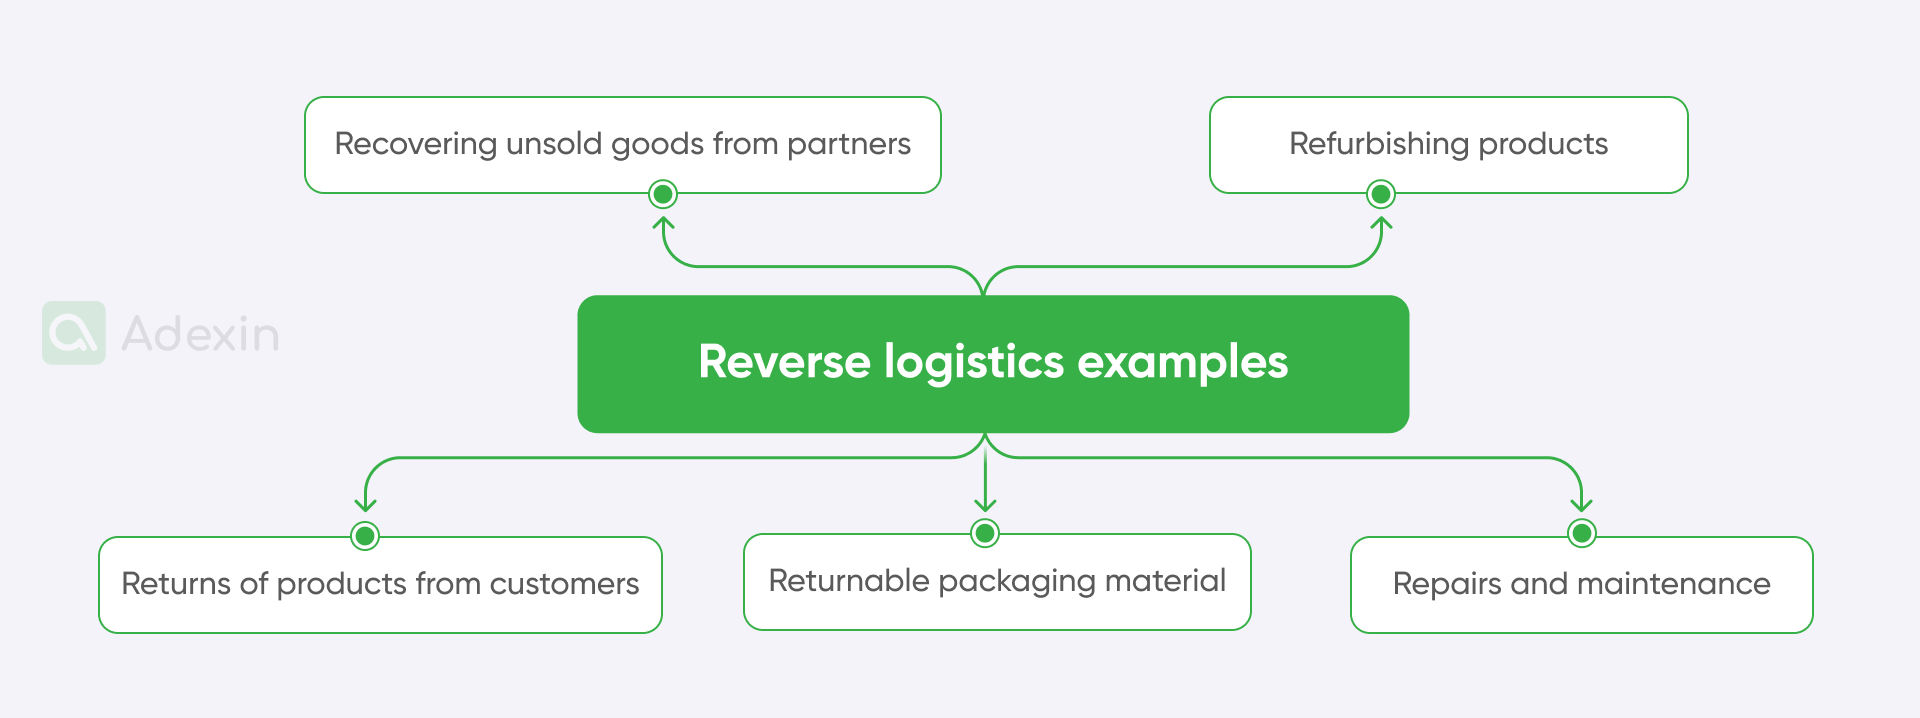 Reverse logistics examples